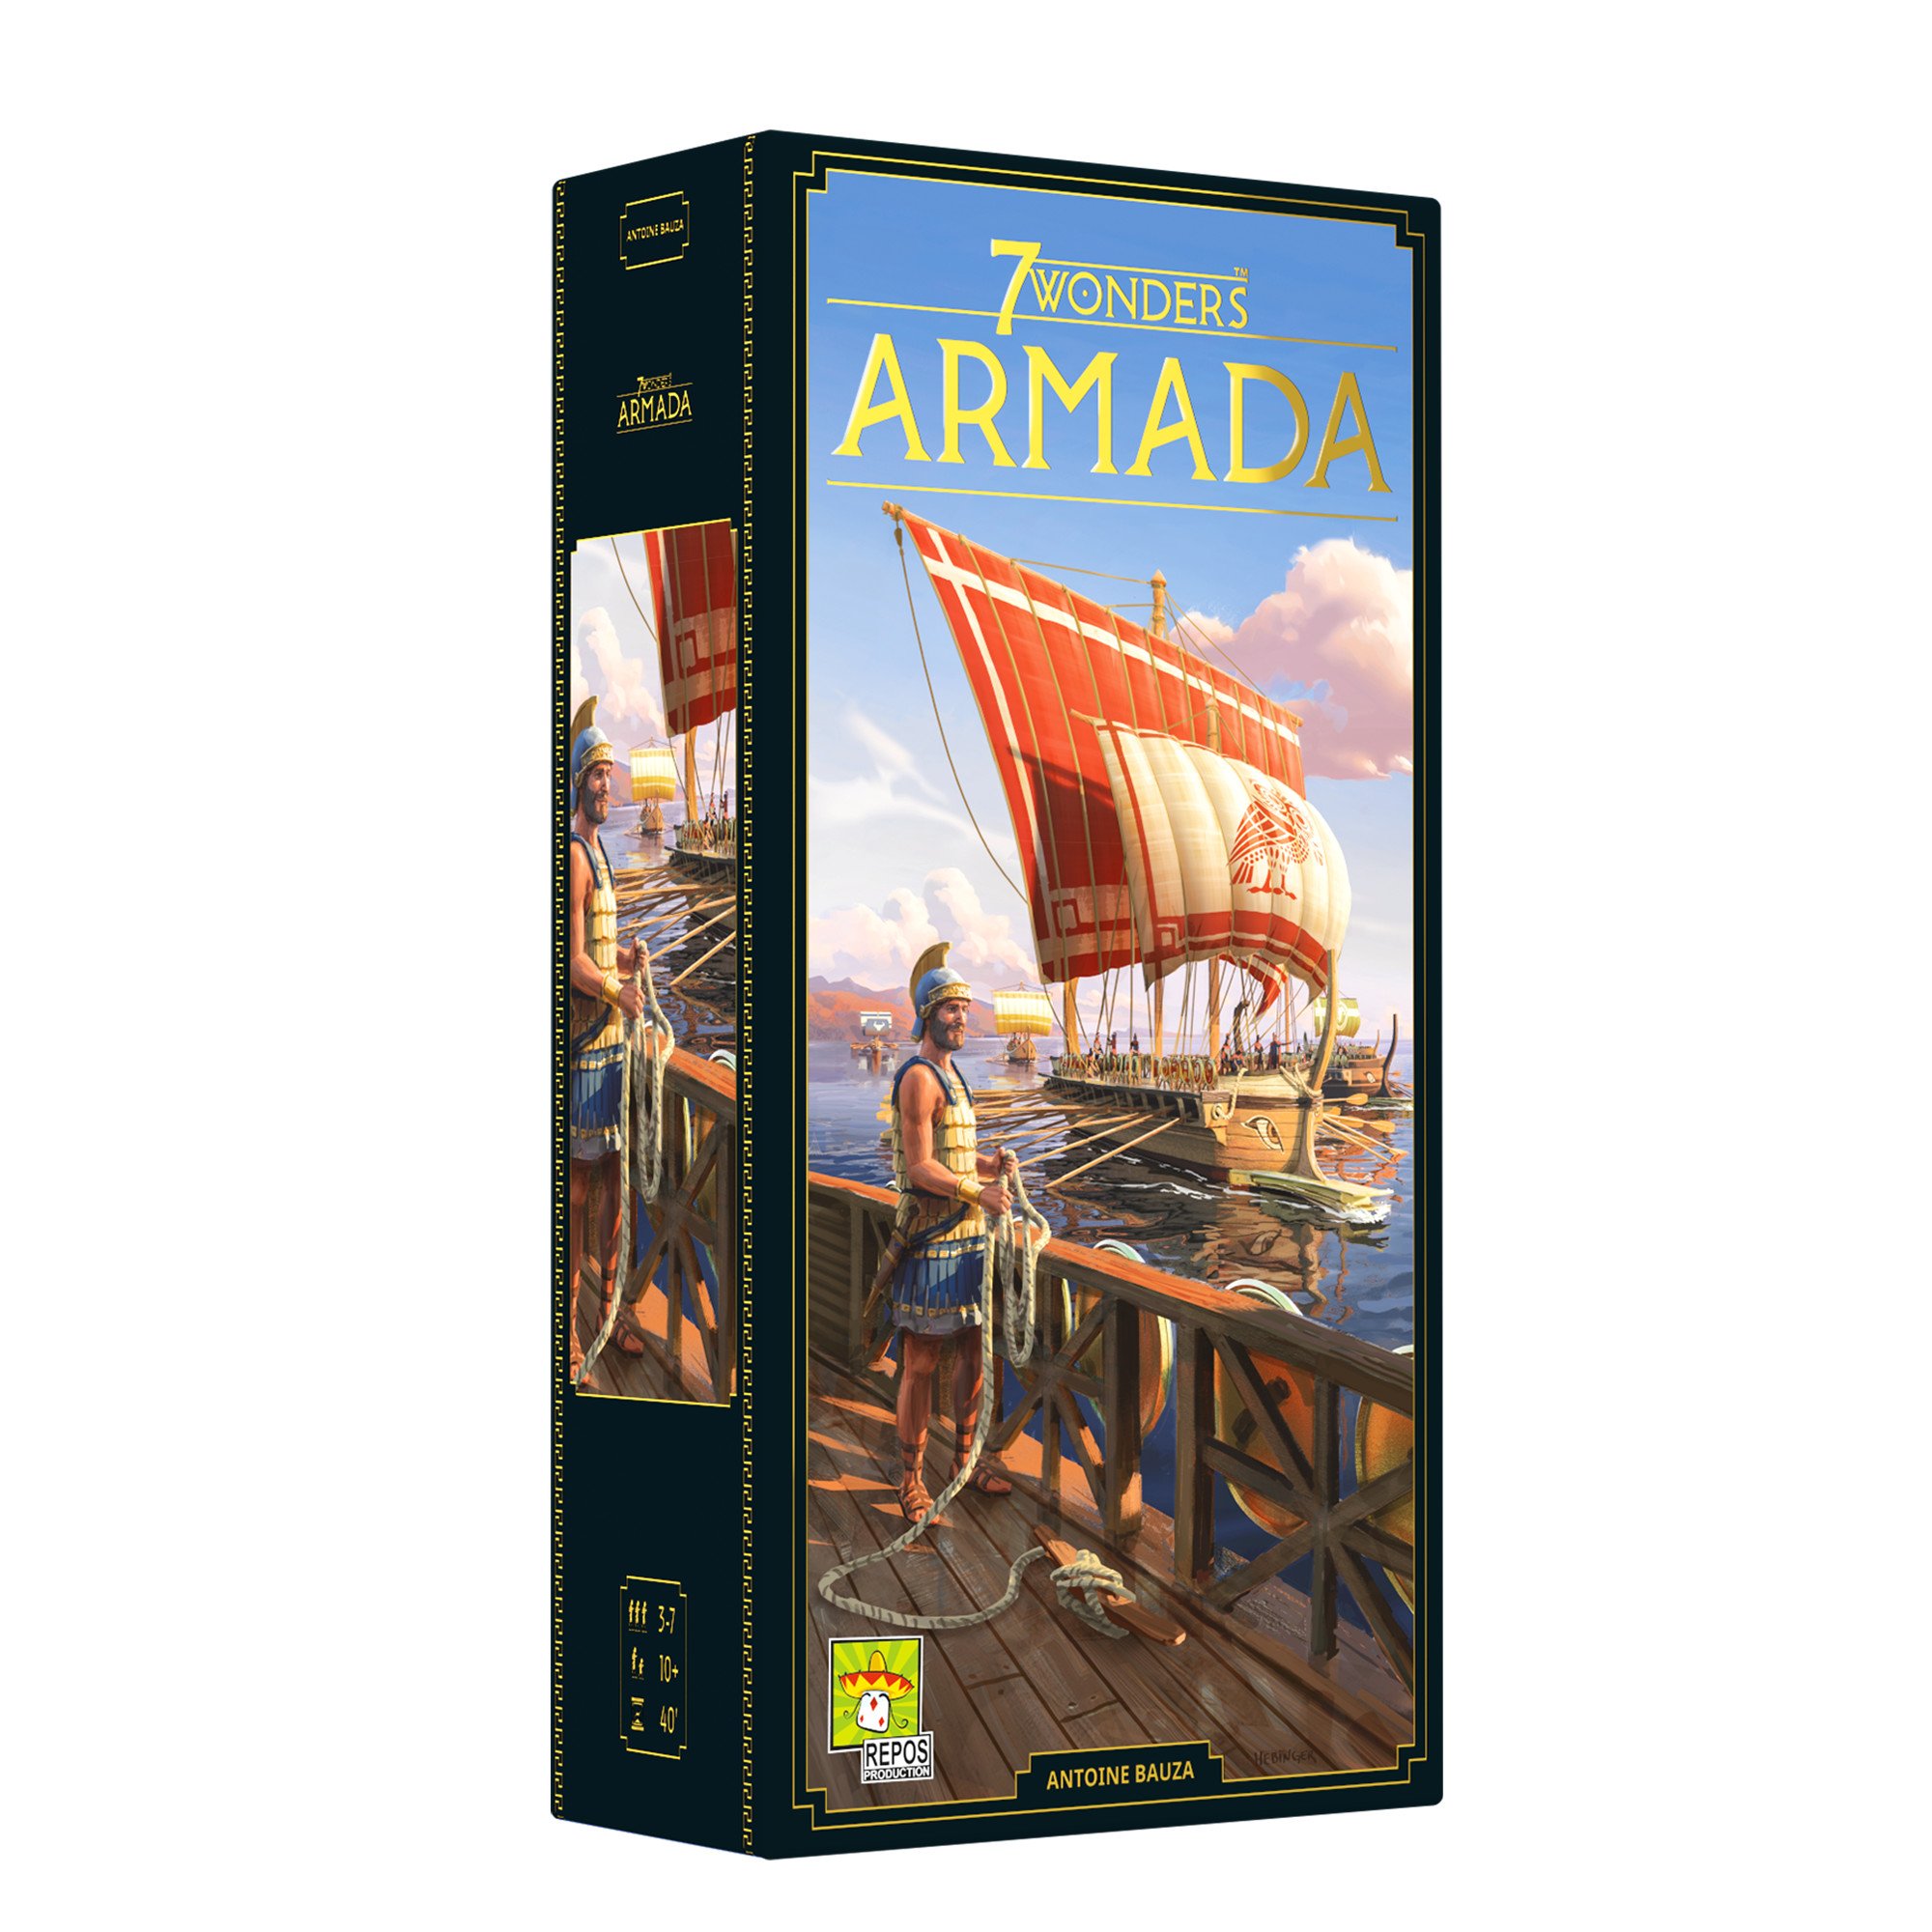 7 Wonders Armada (New Edition)